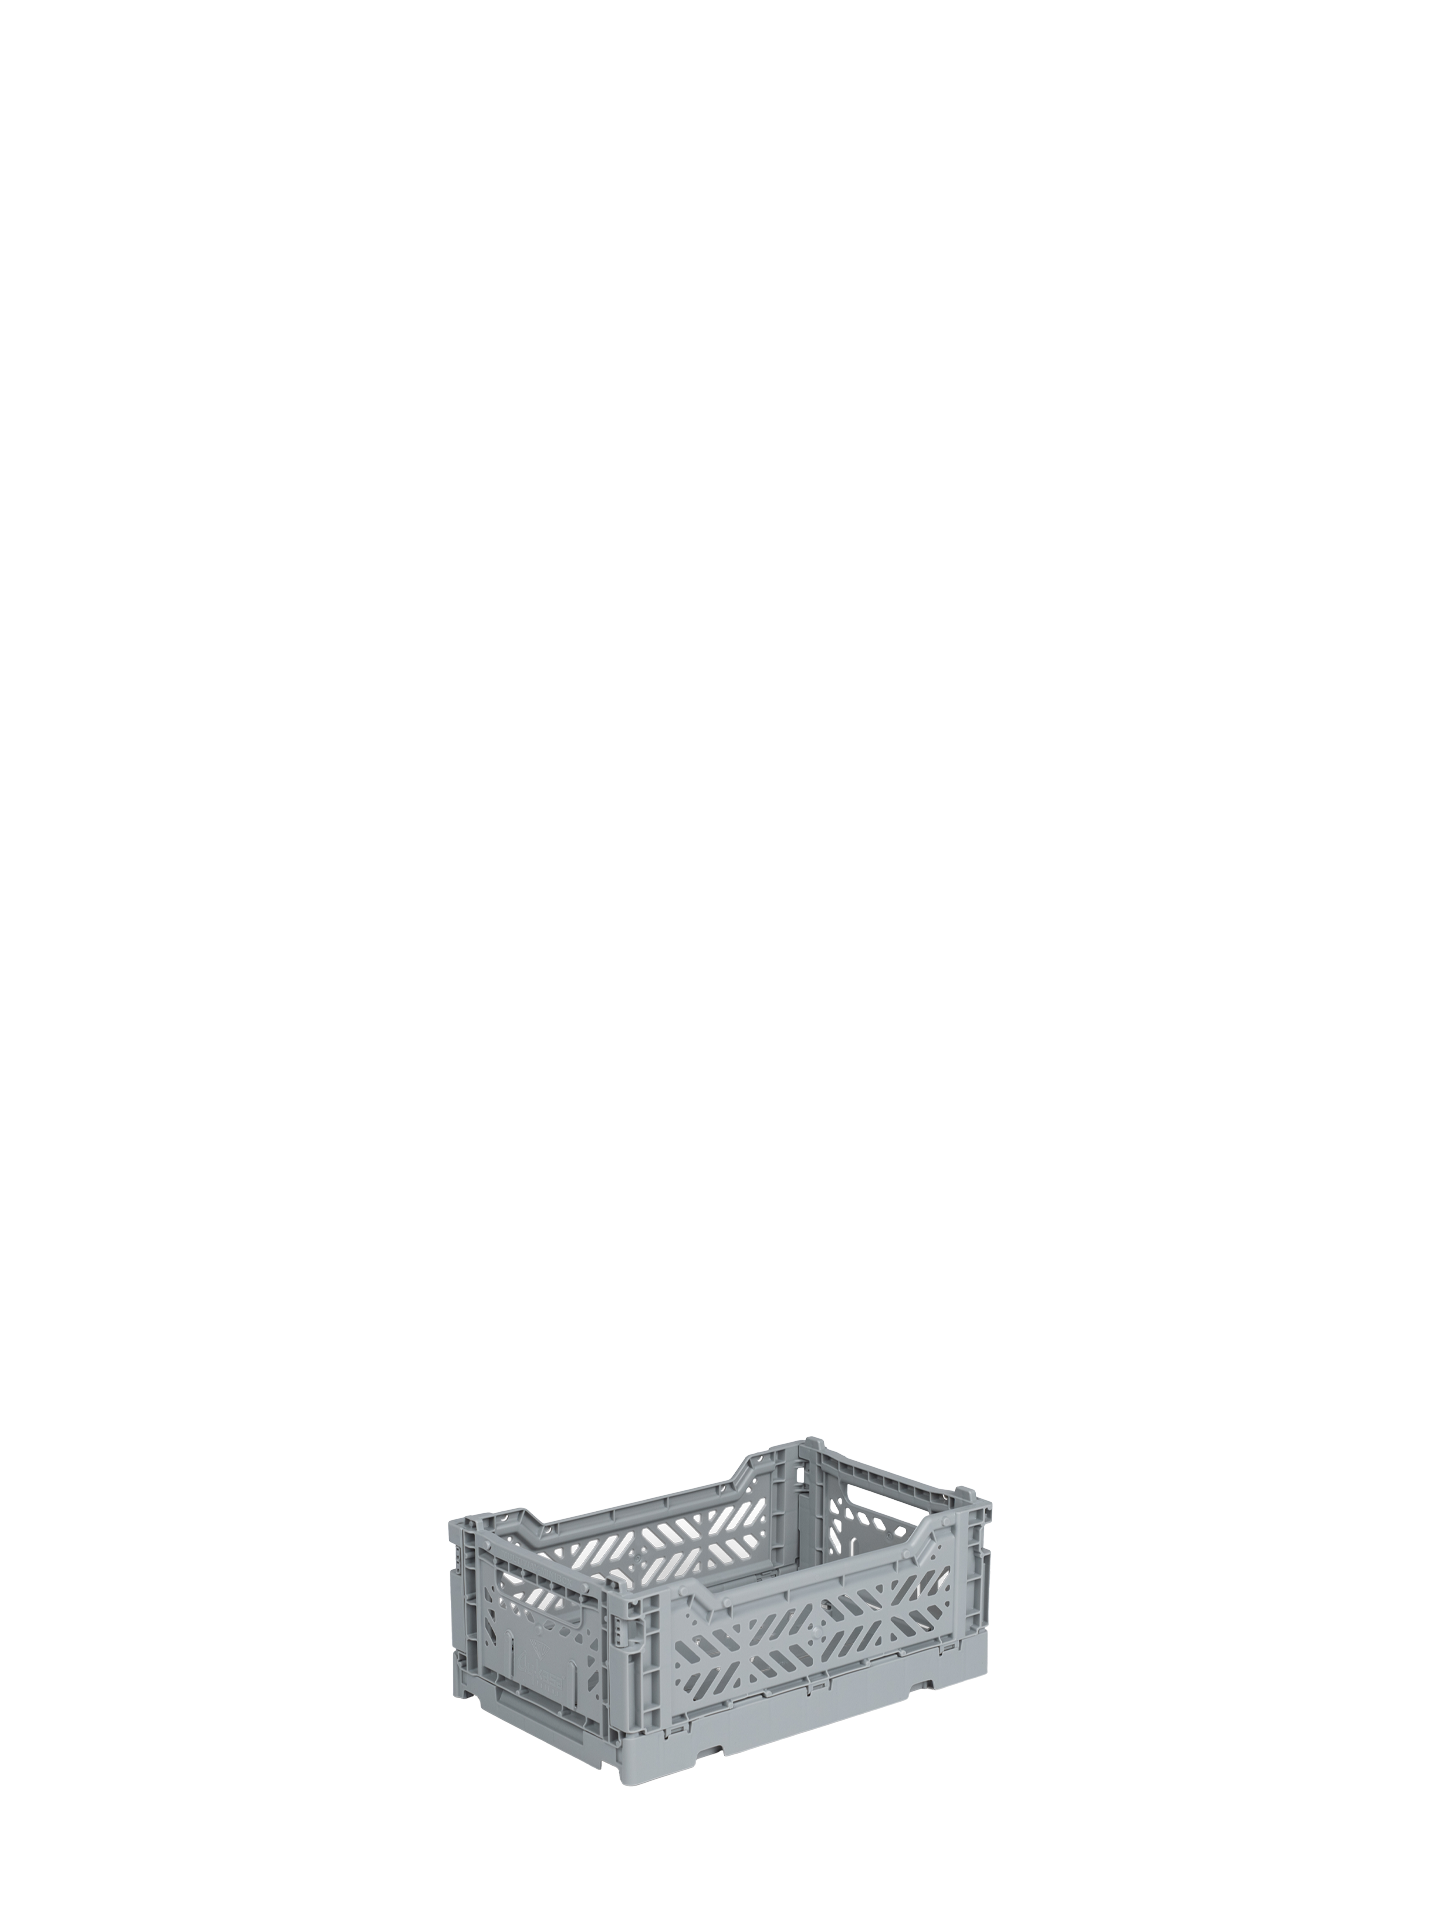 Mini Aykasa crate in grey stacks and folds